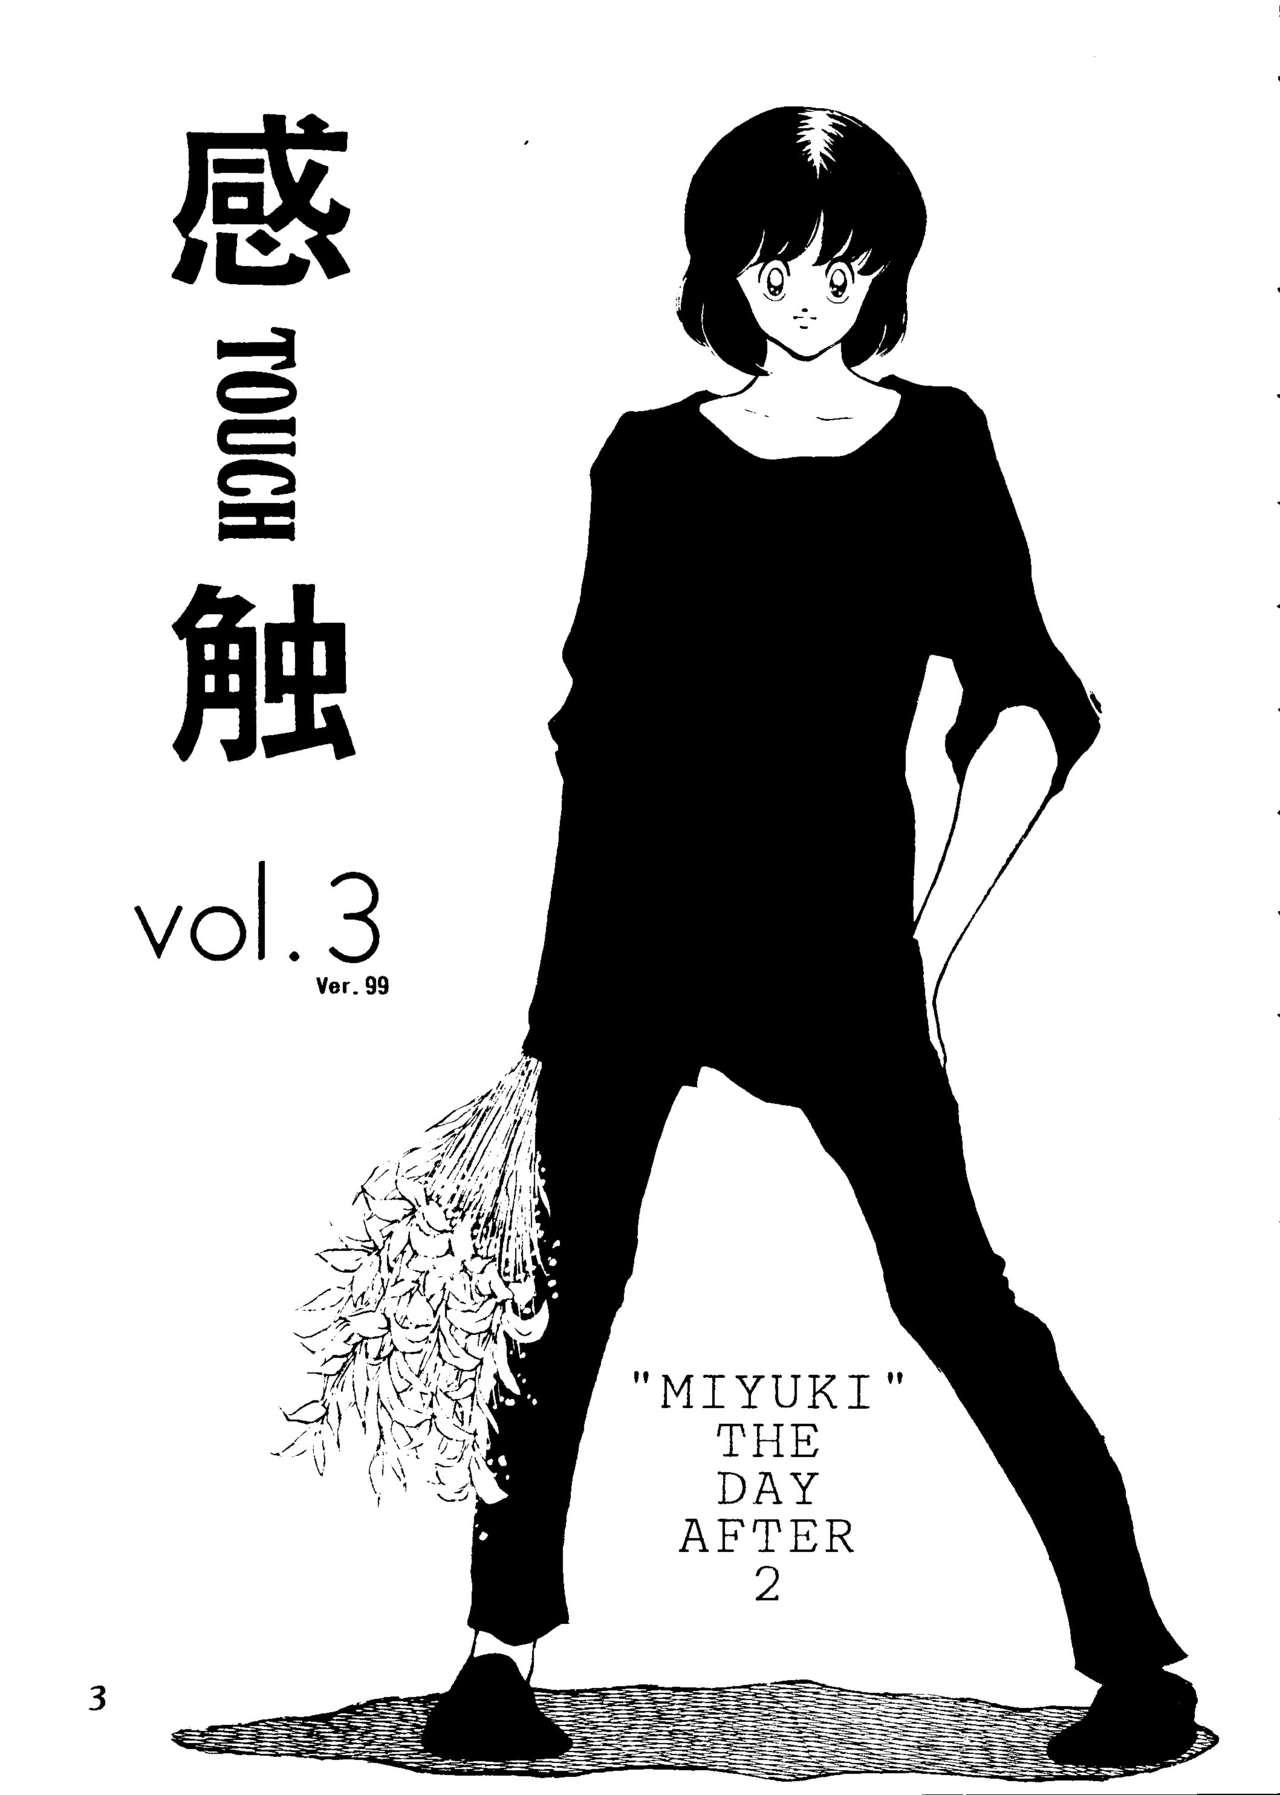 Tia Touch vol. 3 ver.99 - Miyuki Sister - Page 2